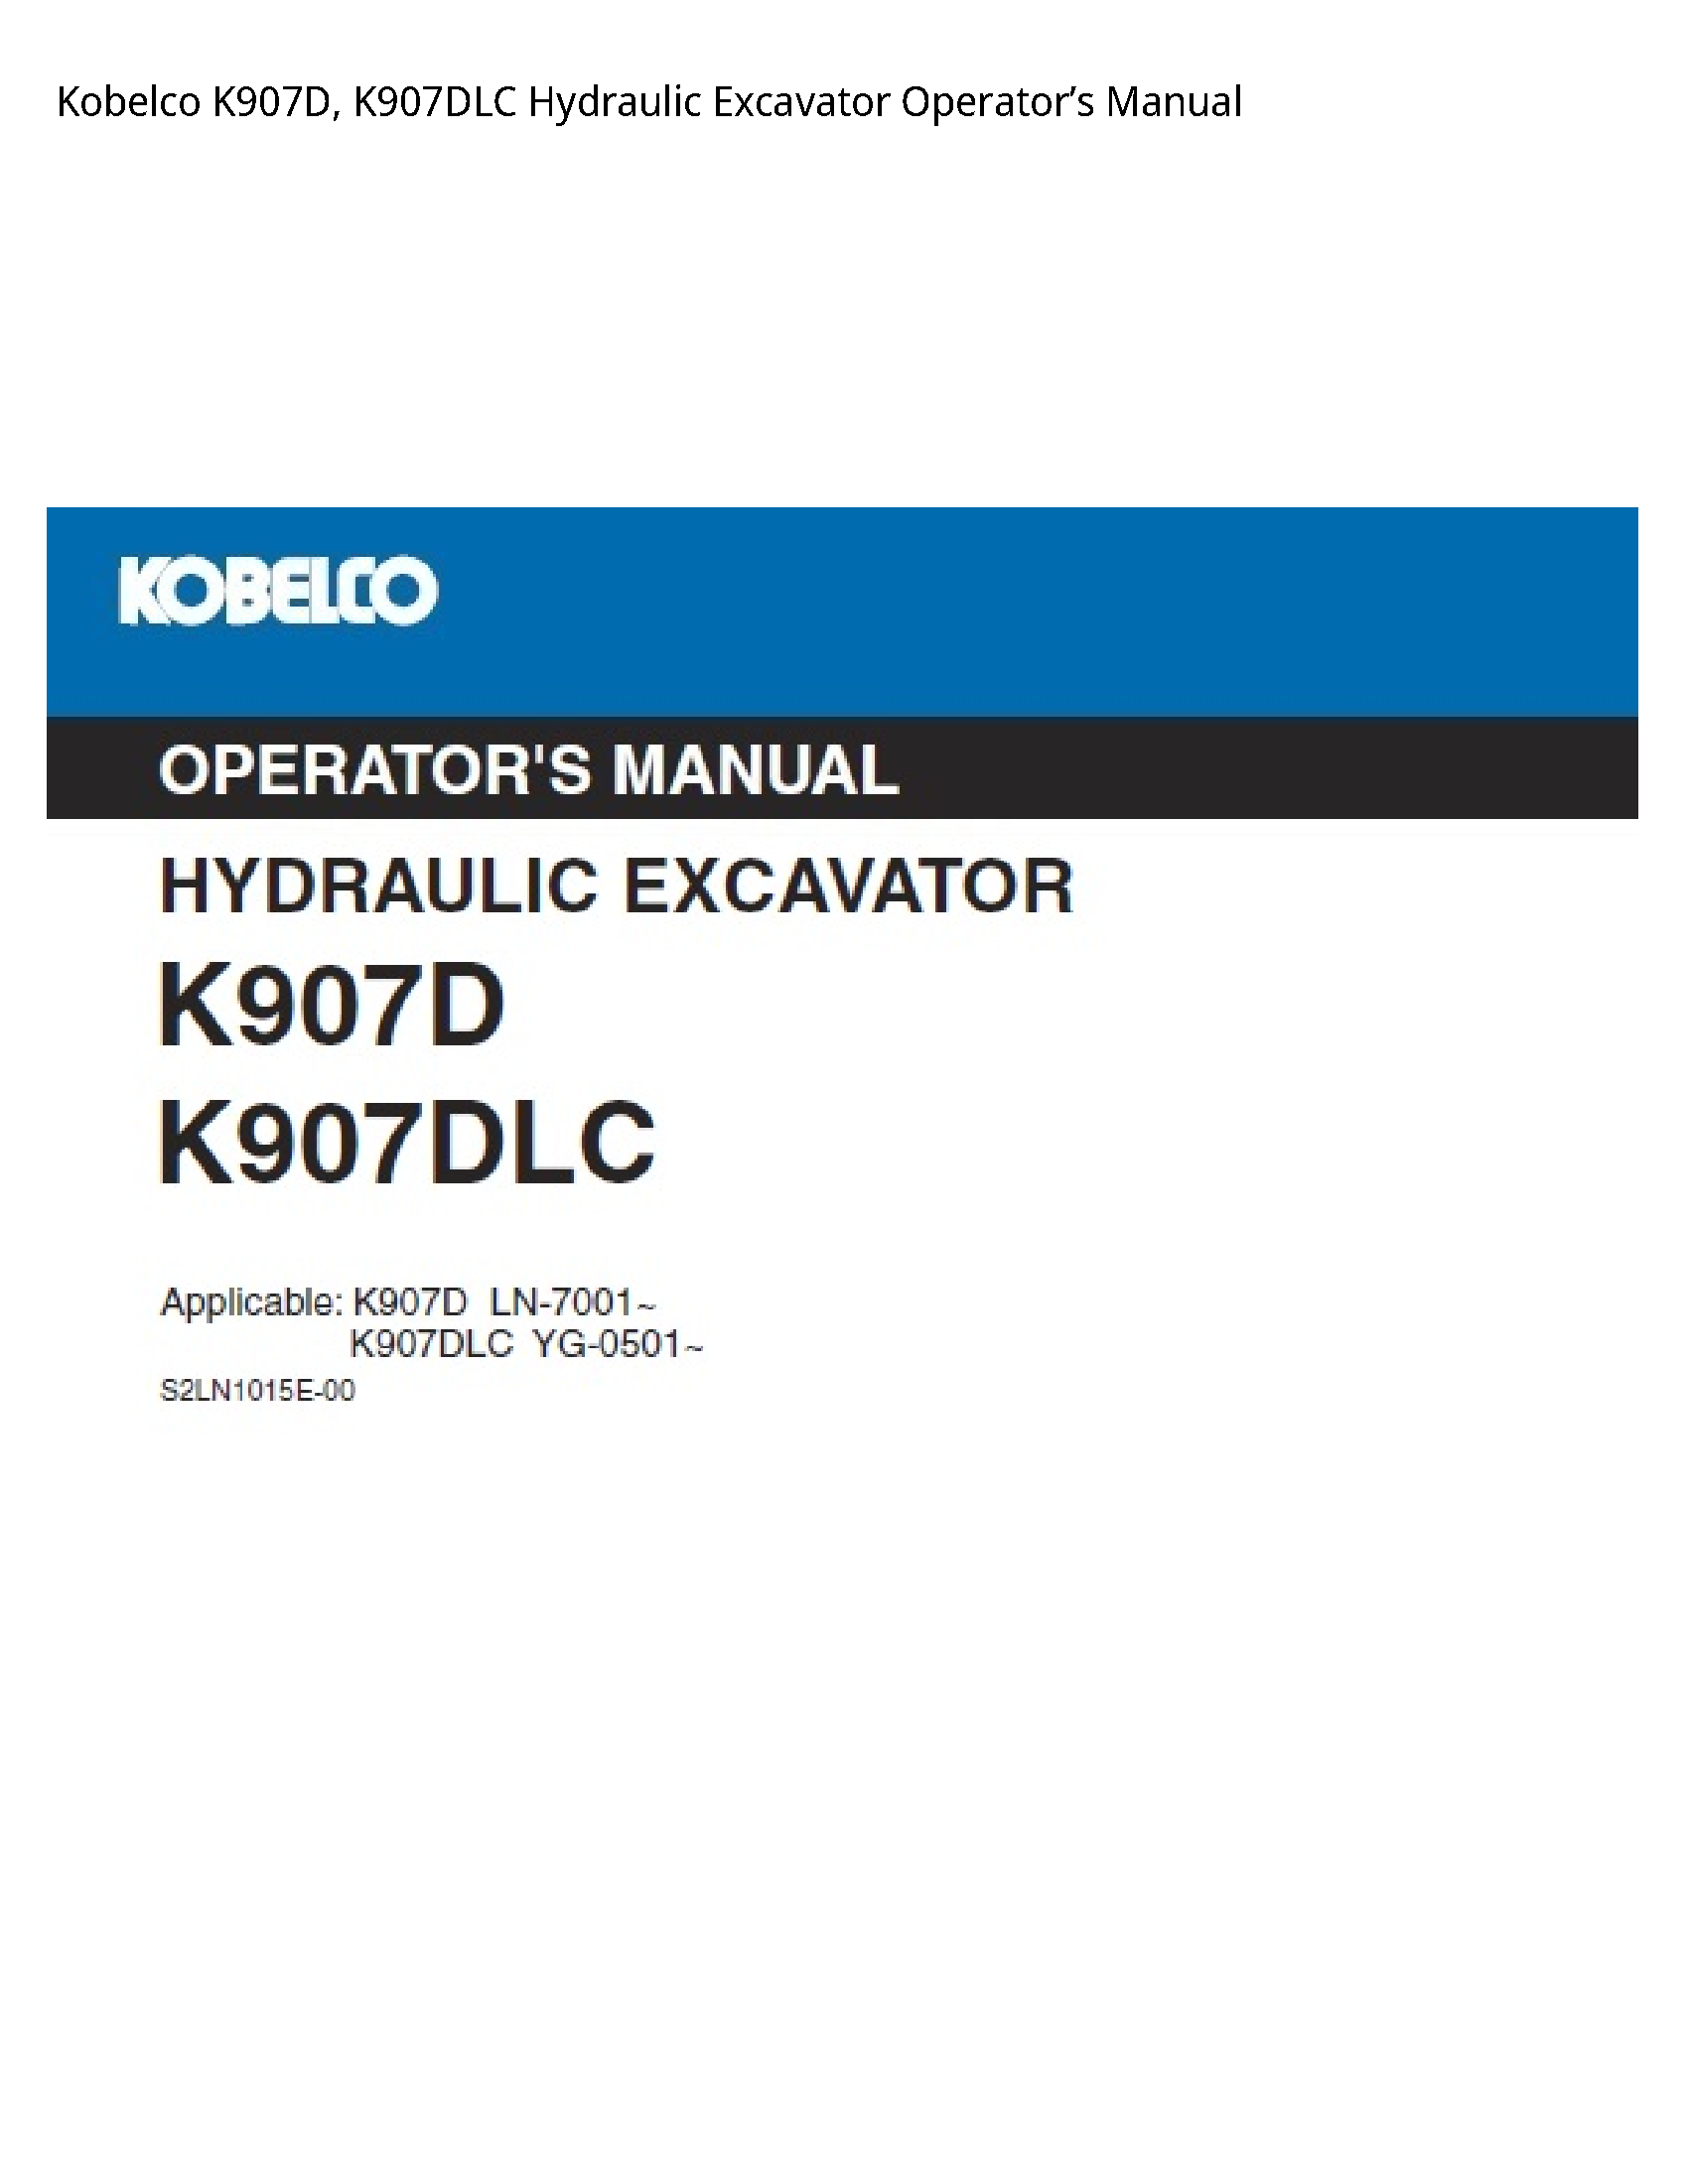 Kobelco K907D Hydraulic Excavator Operator’s manual